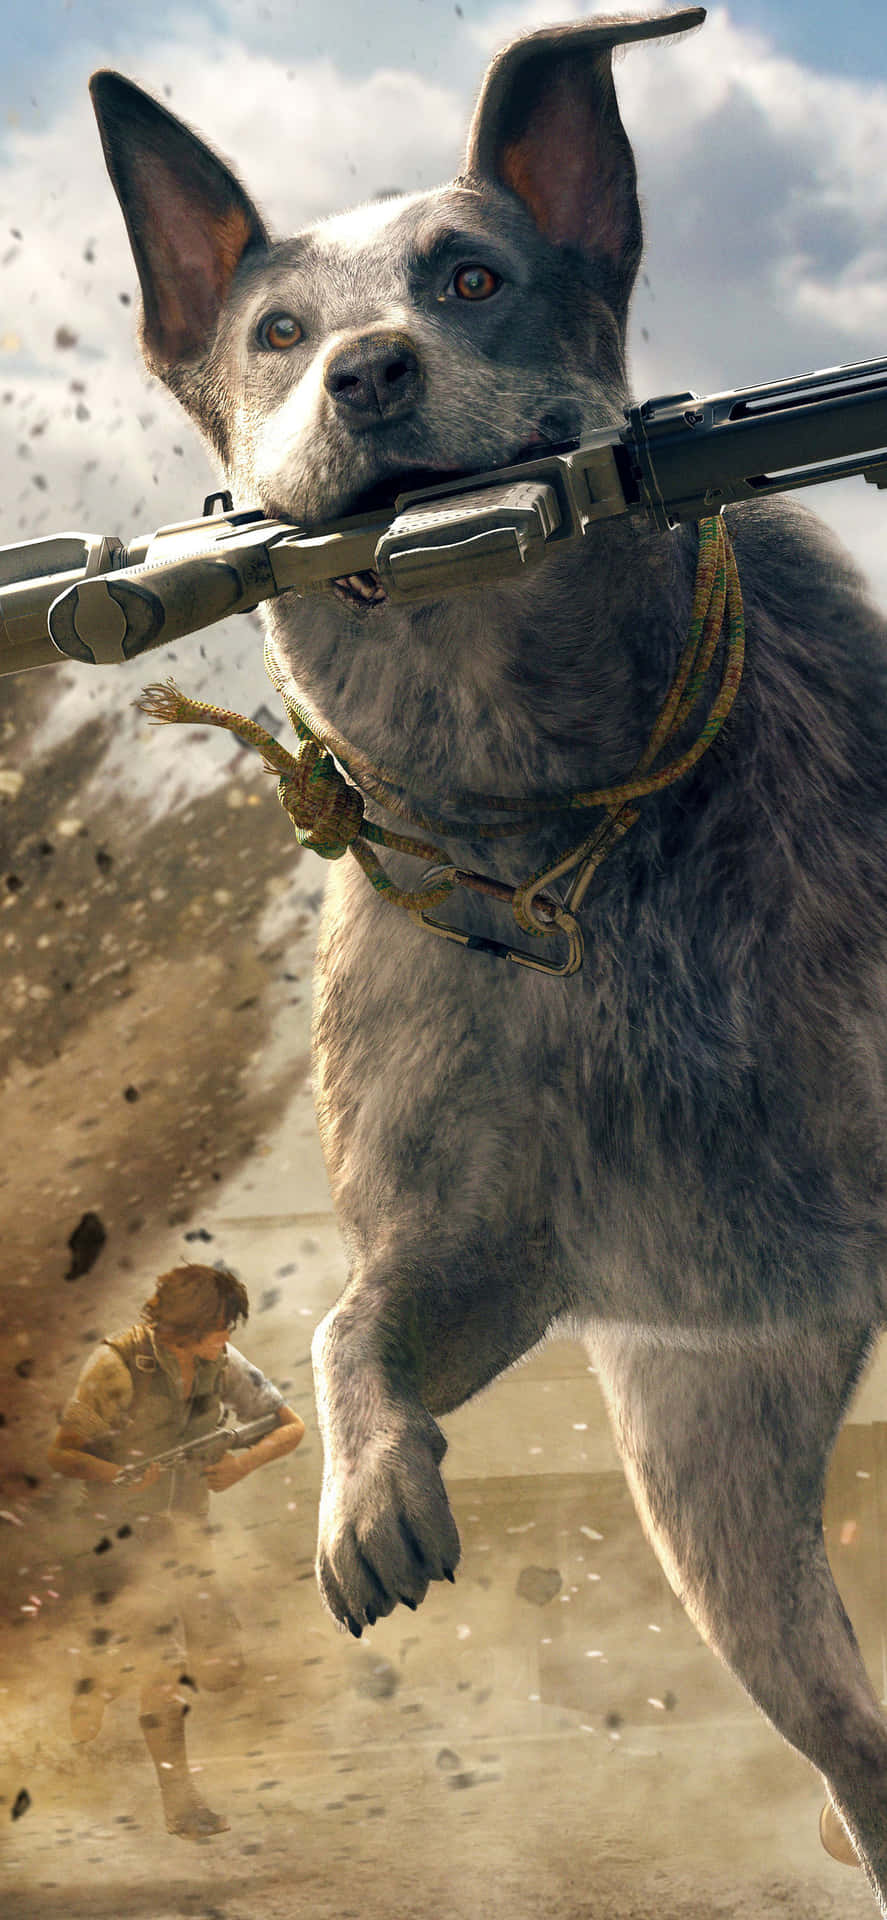 Experimentala Belleza De Far Cry 5 Directamente En Tu Bolsillo Con El Iphone Xs.